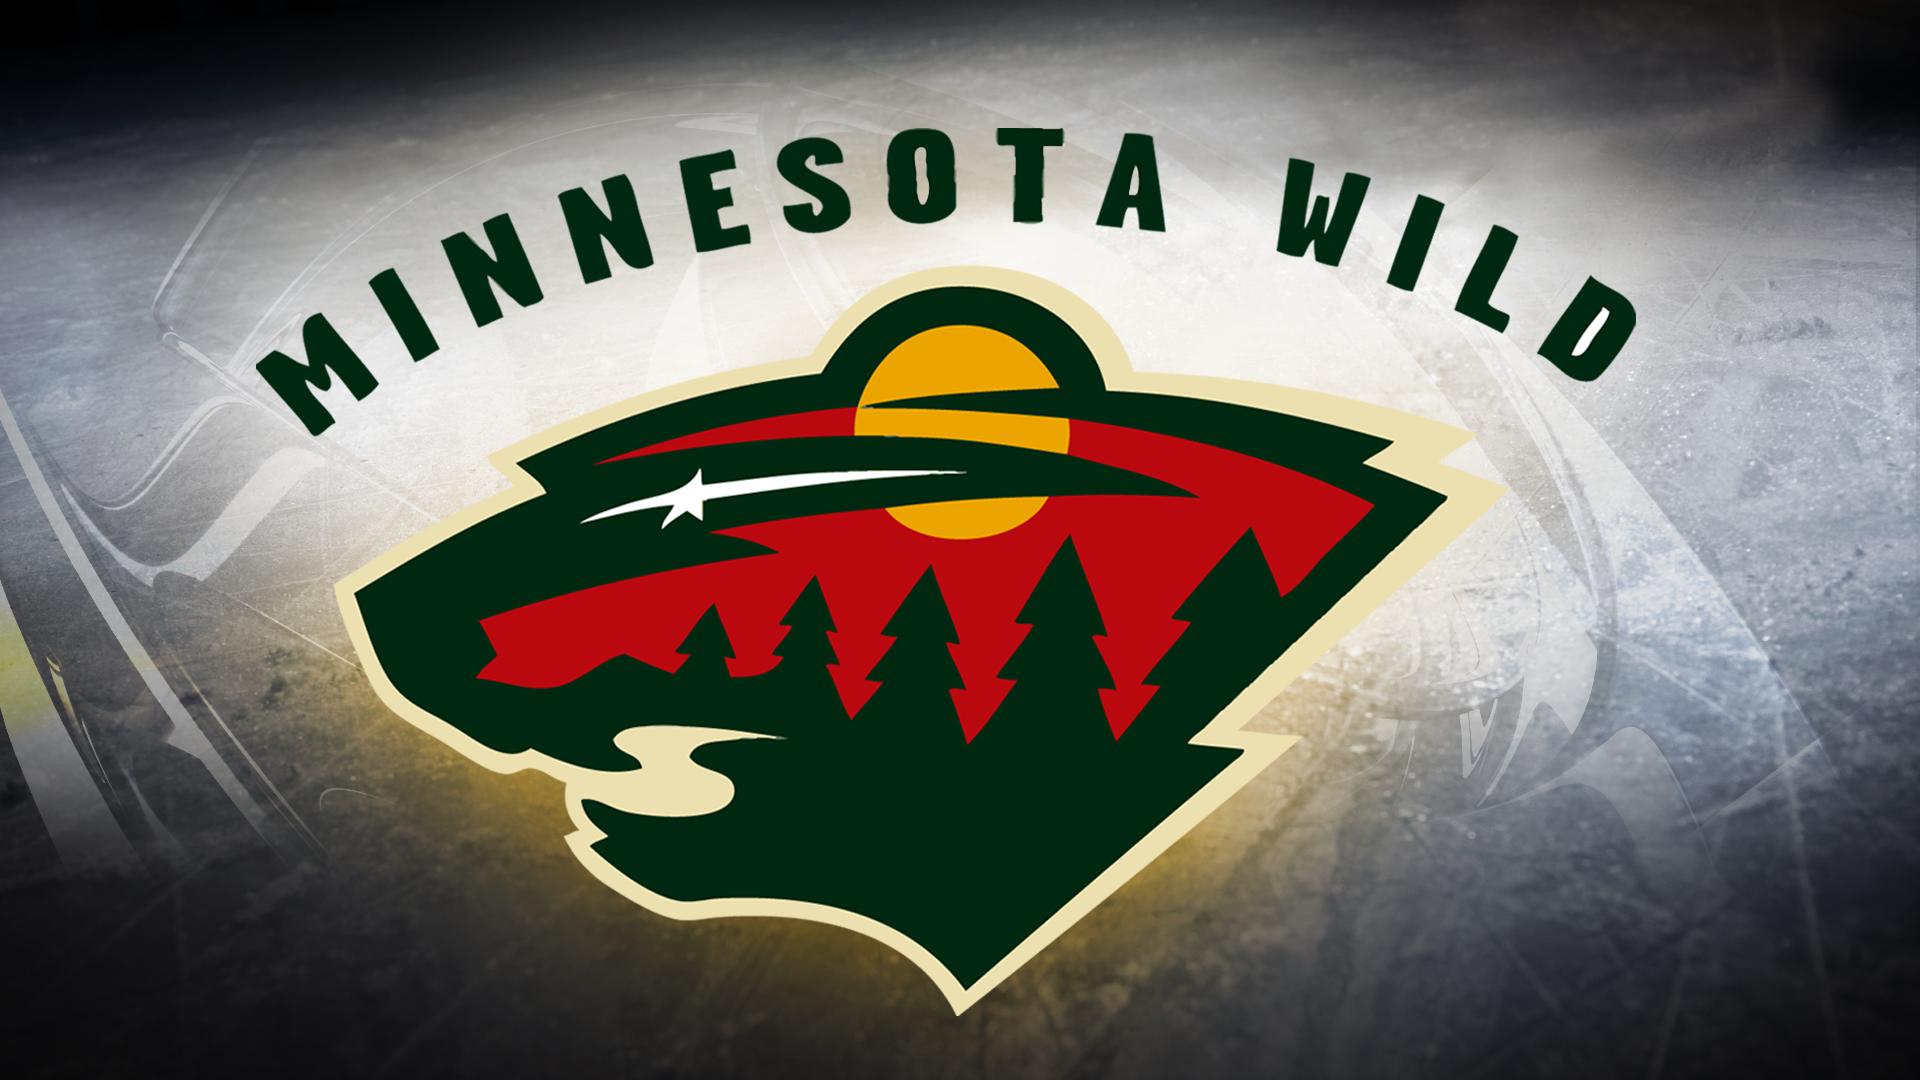 Minnesota Wild playoff wallpaper. (Via the Wild Twitter) : r/wildhockey